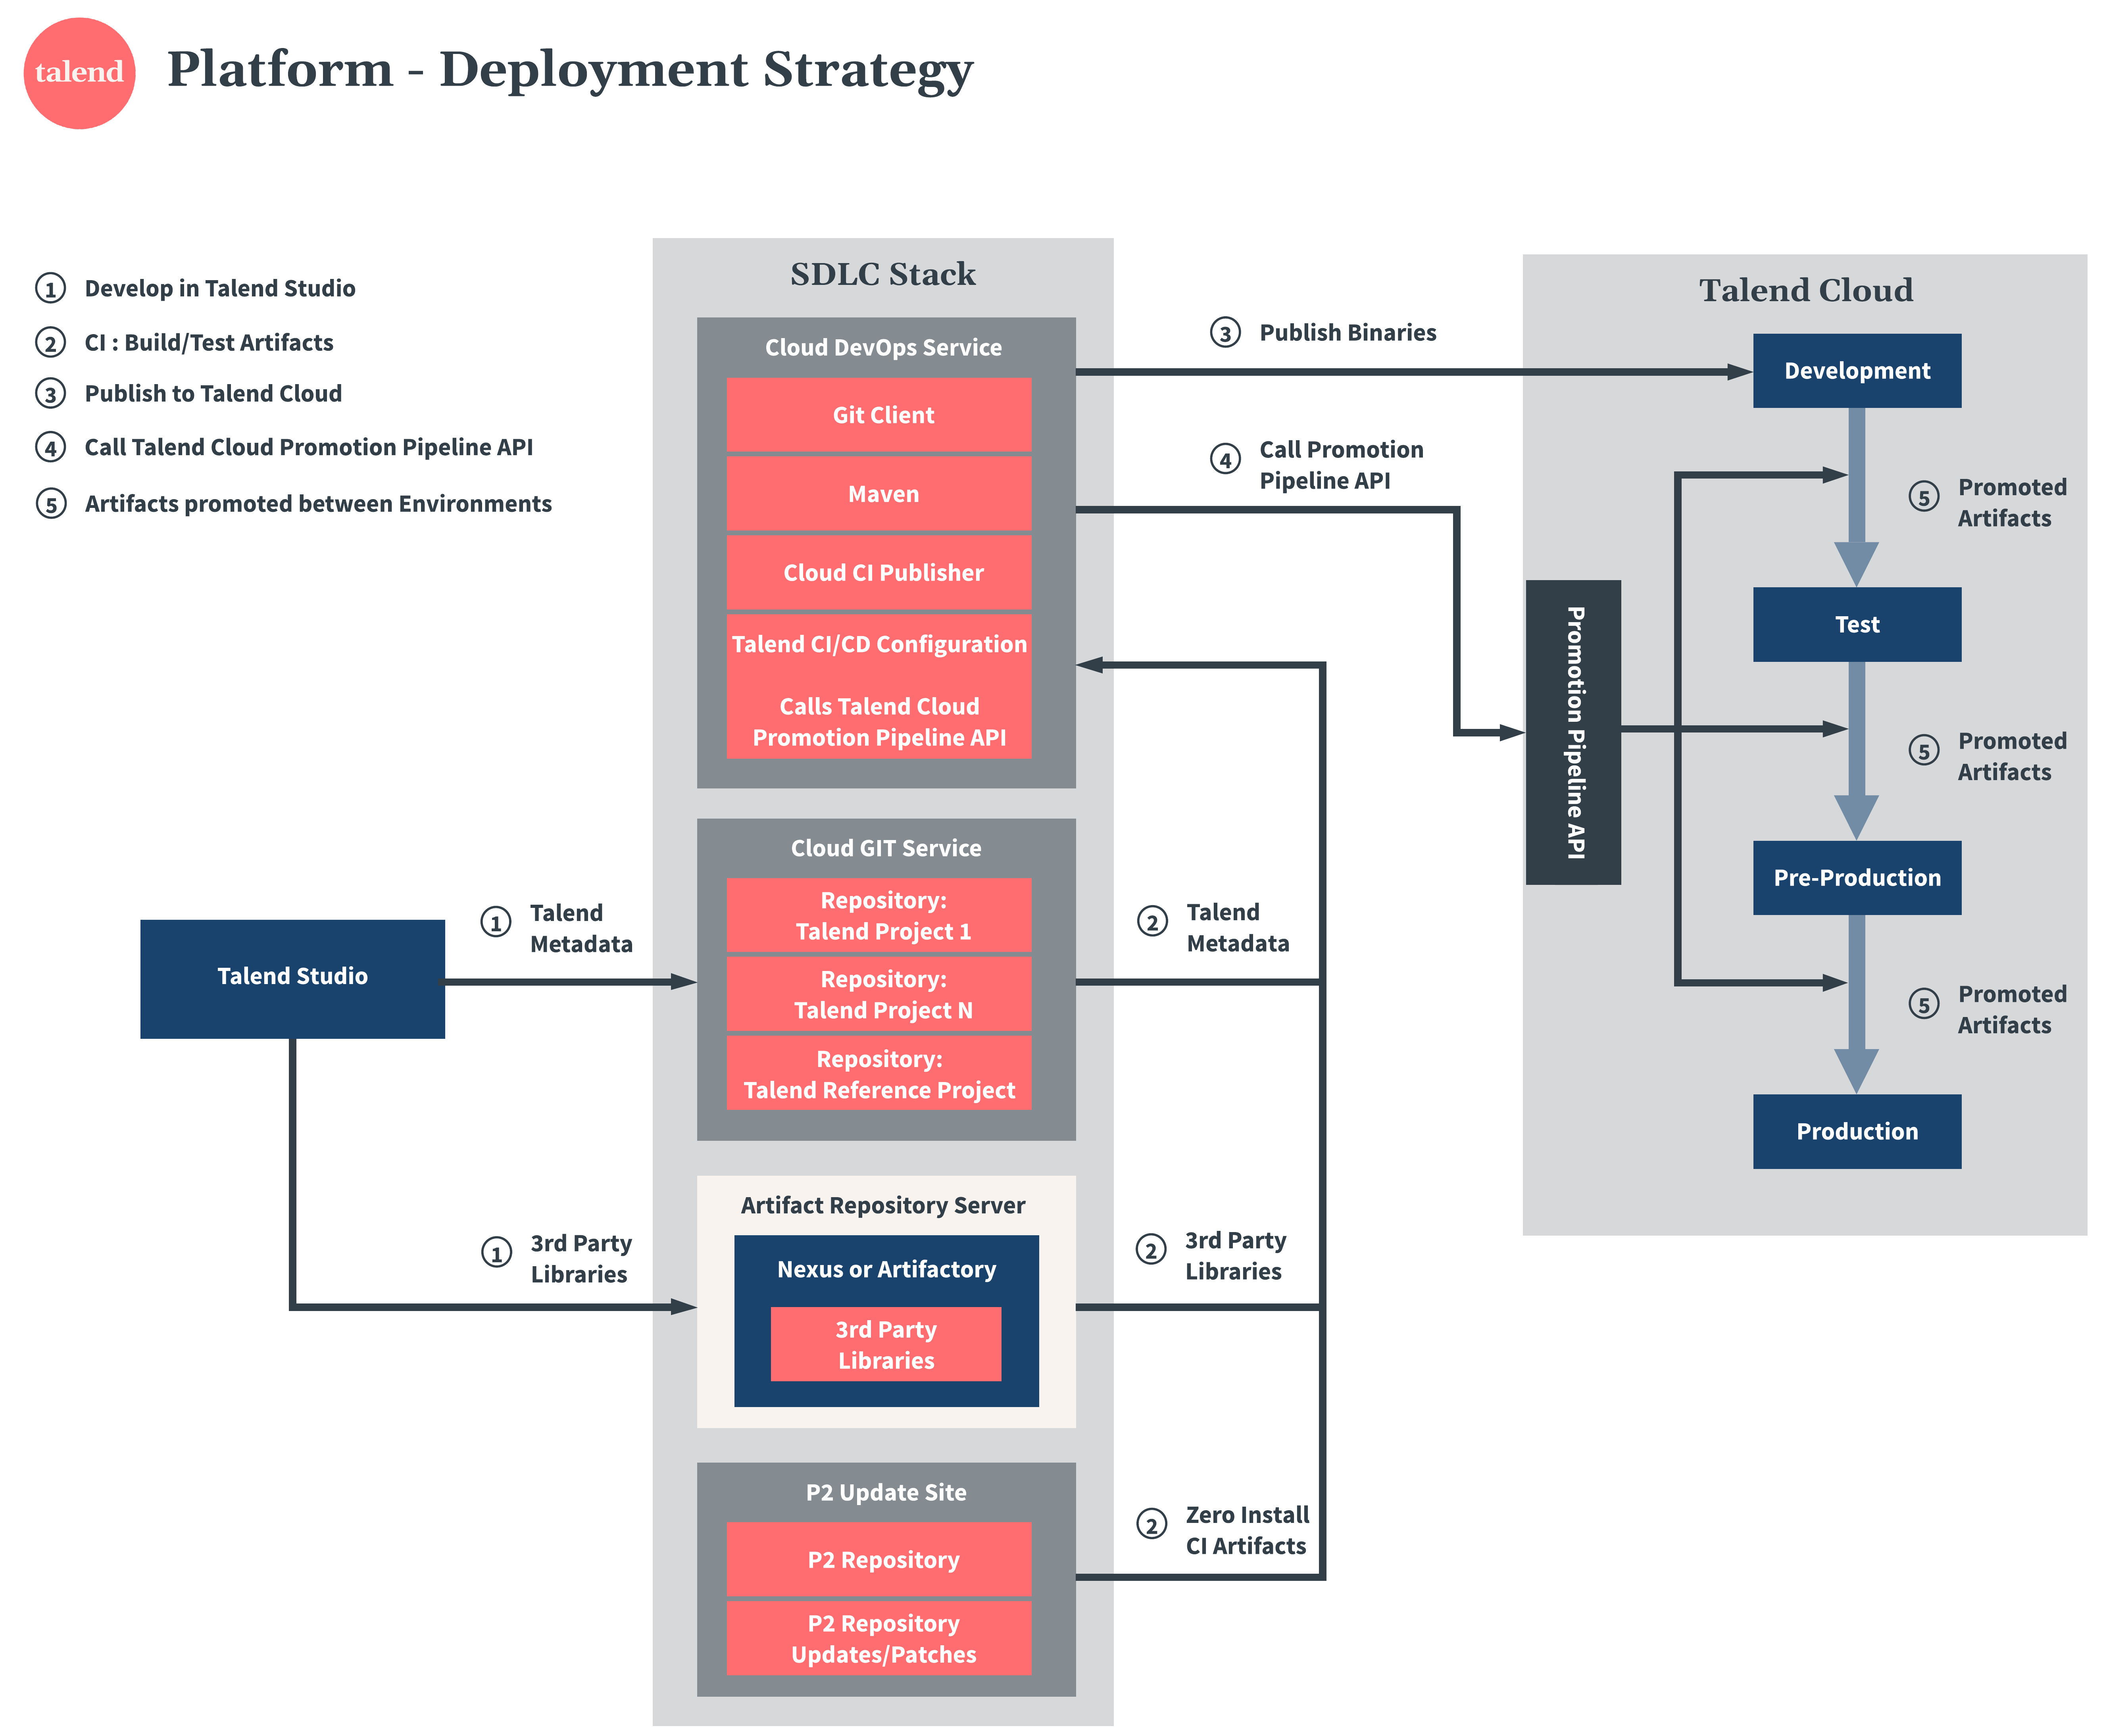 Talend Cloud Platform Products deployment strategy diagram.